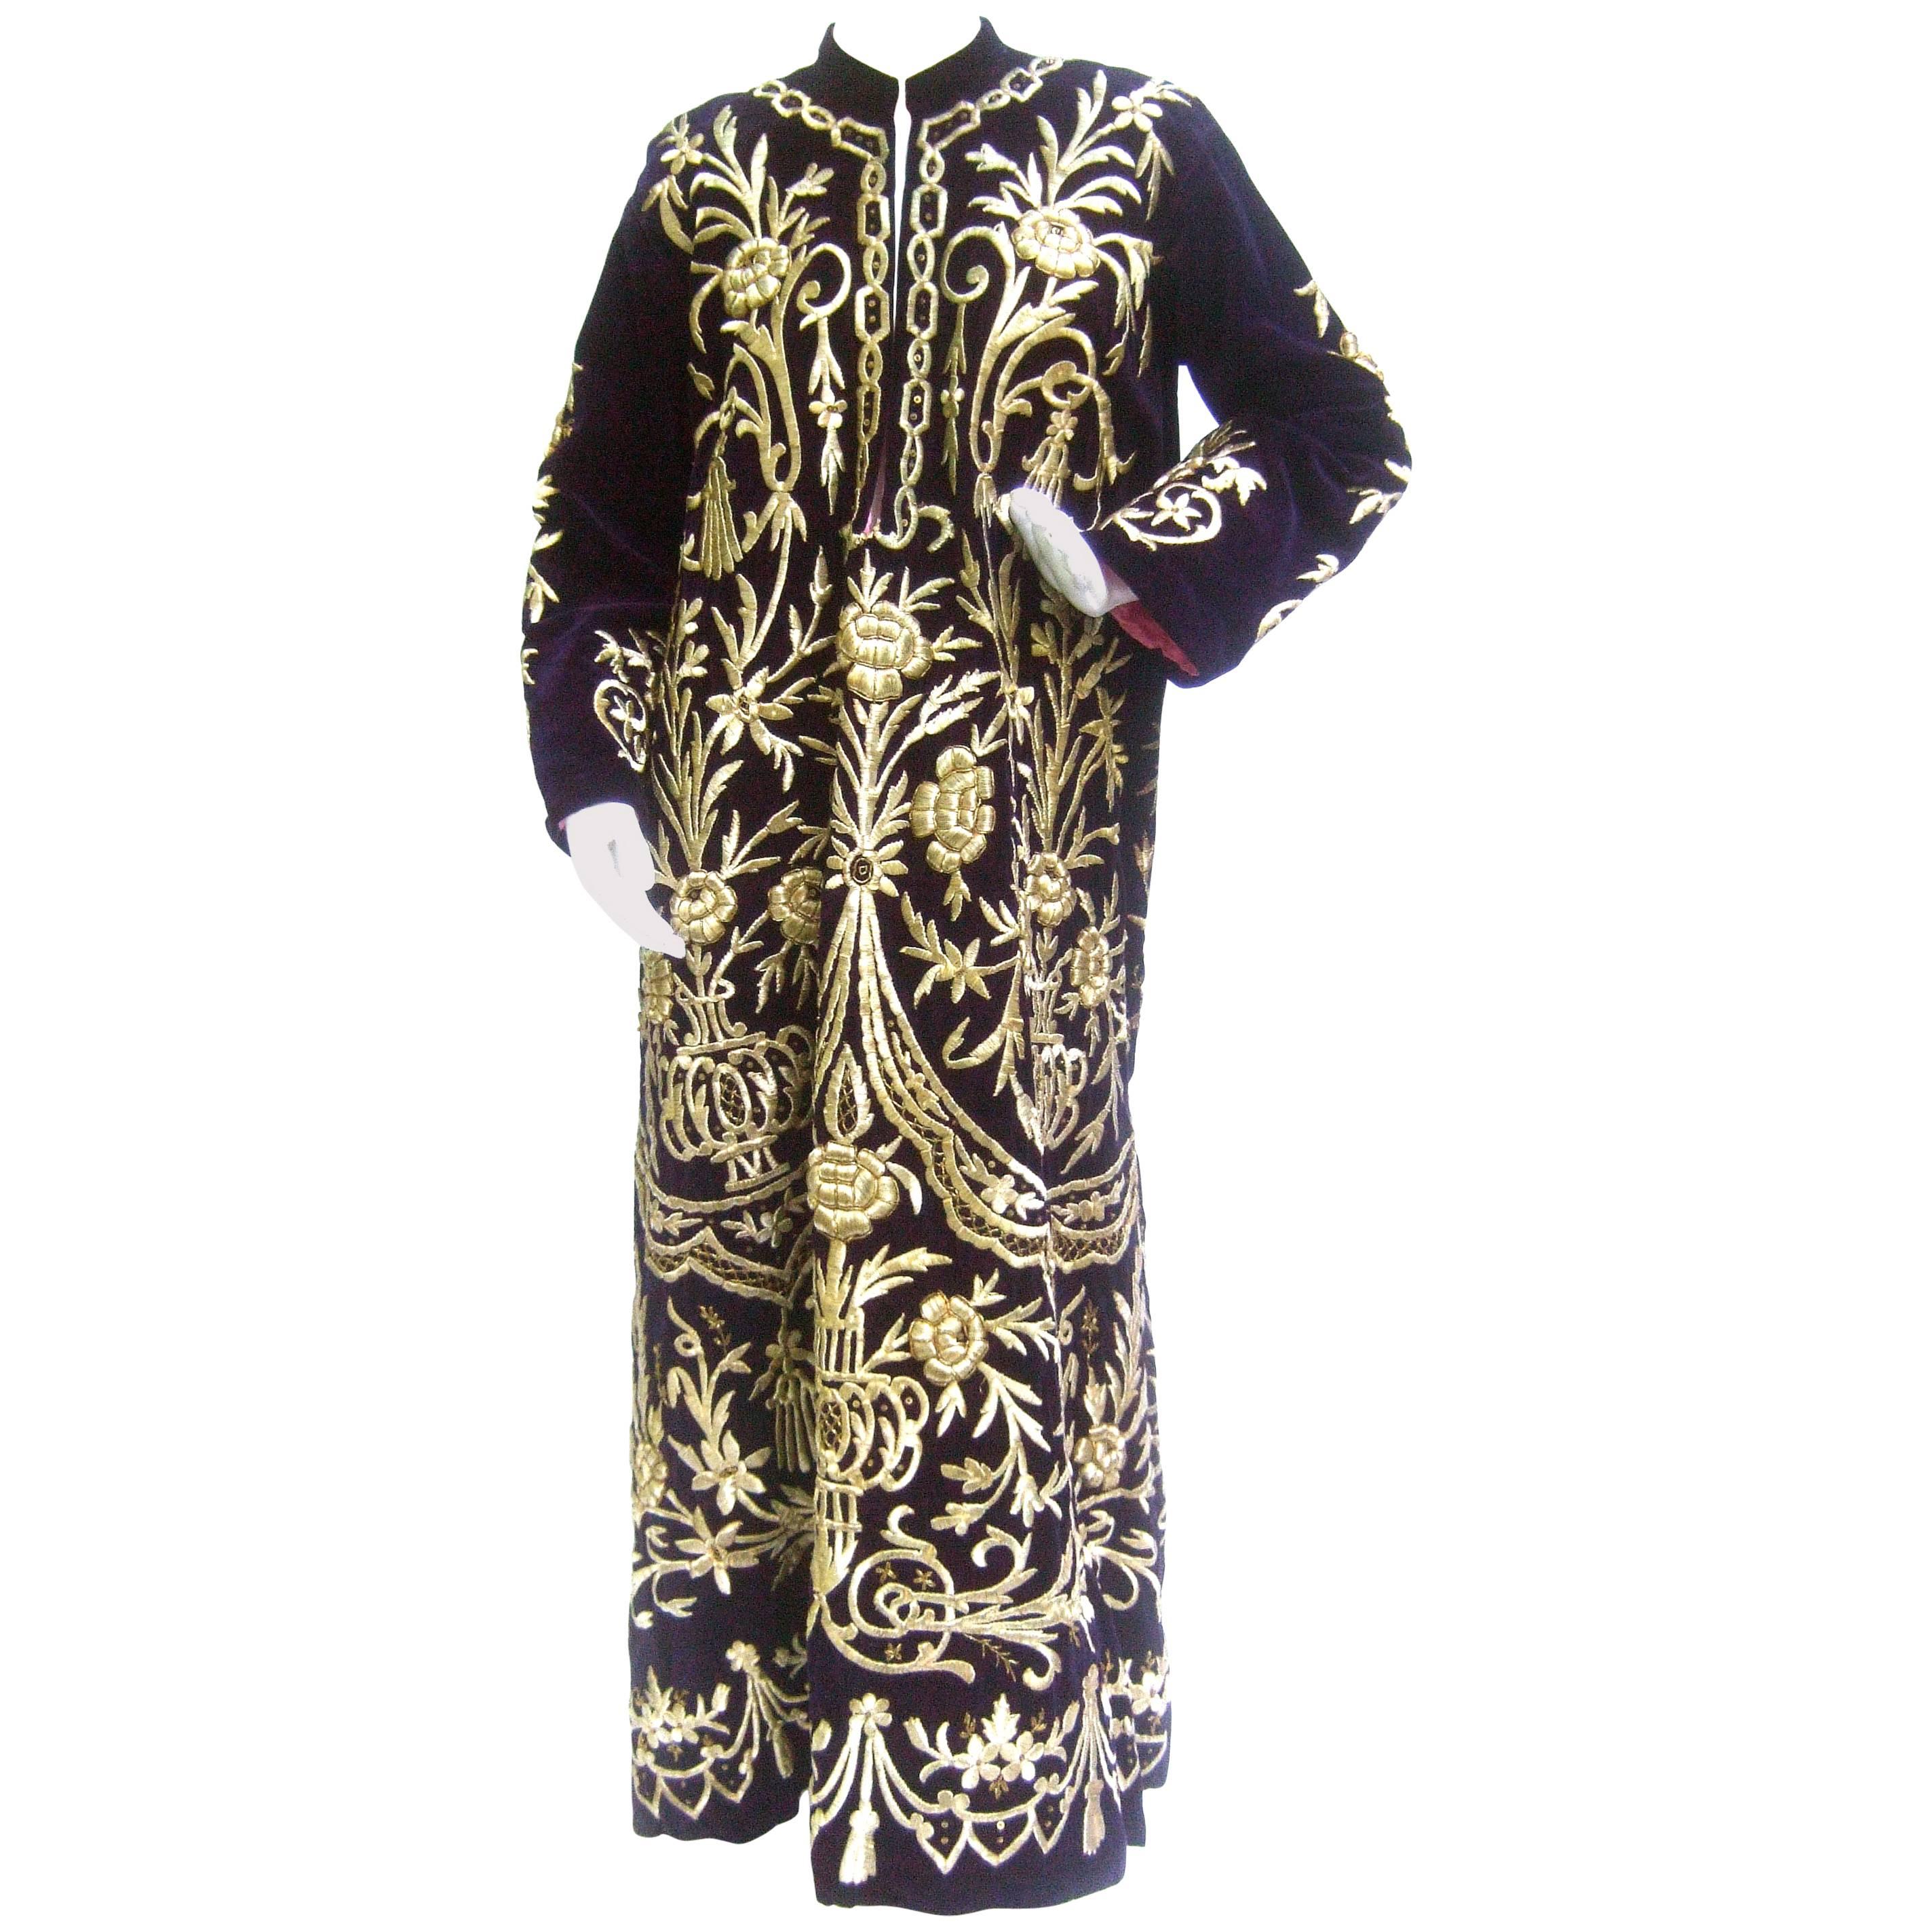 Exquisite Museum Worthy Aubergene Velvet Embroidered Metallic Caftan Robe